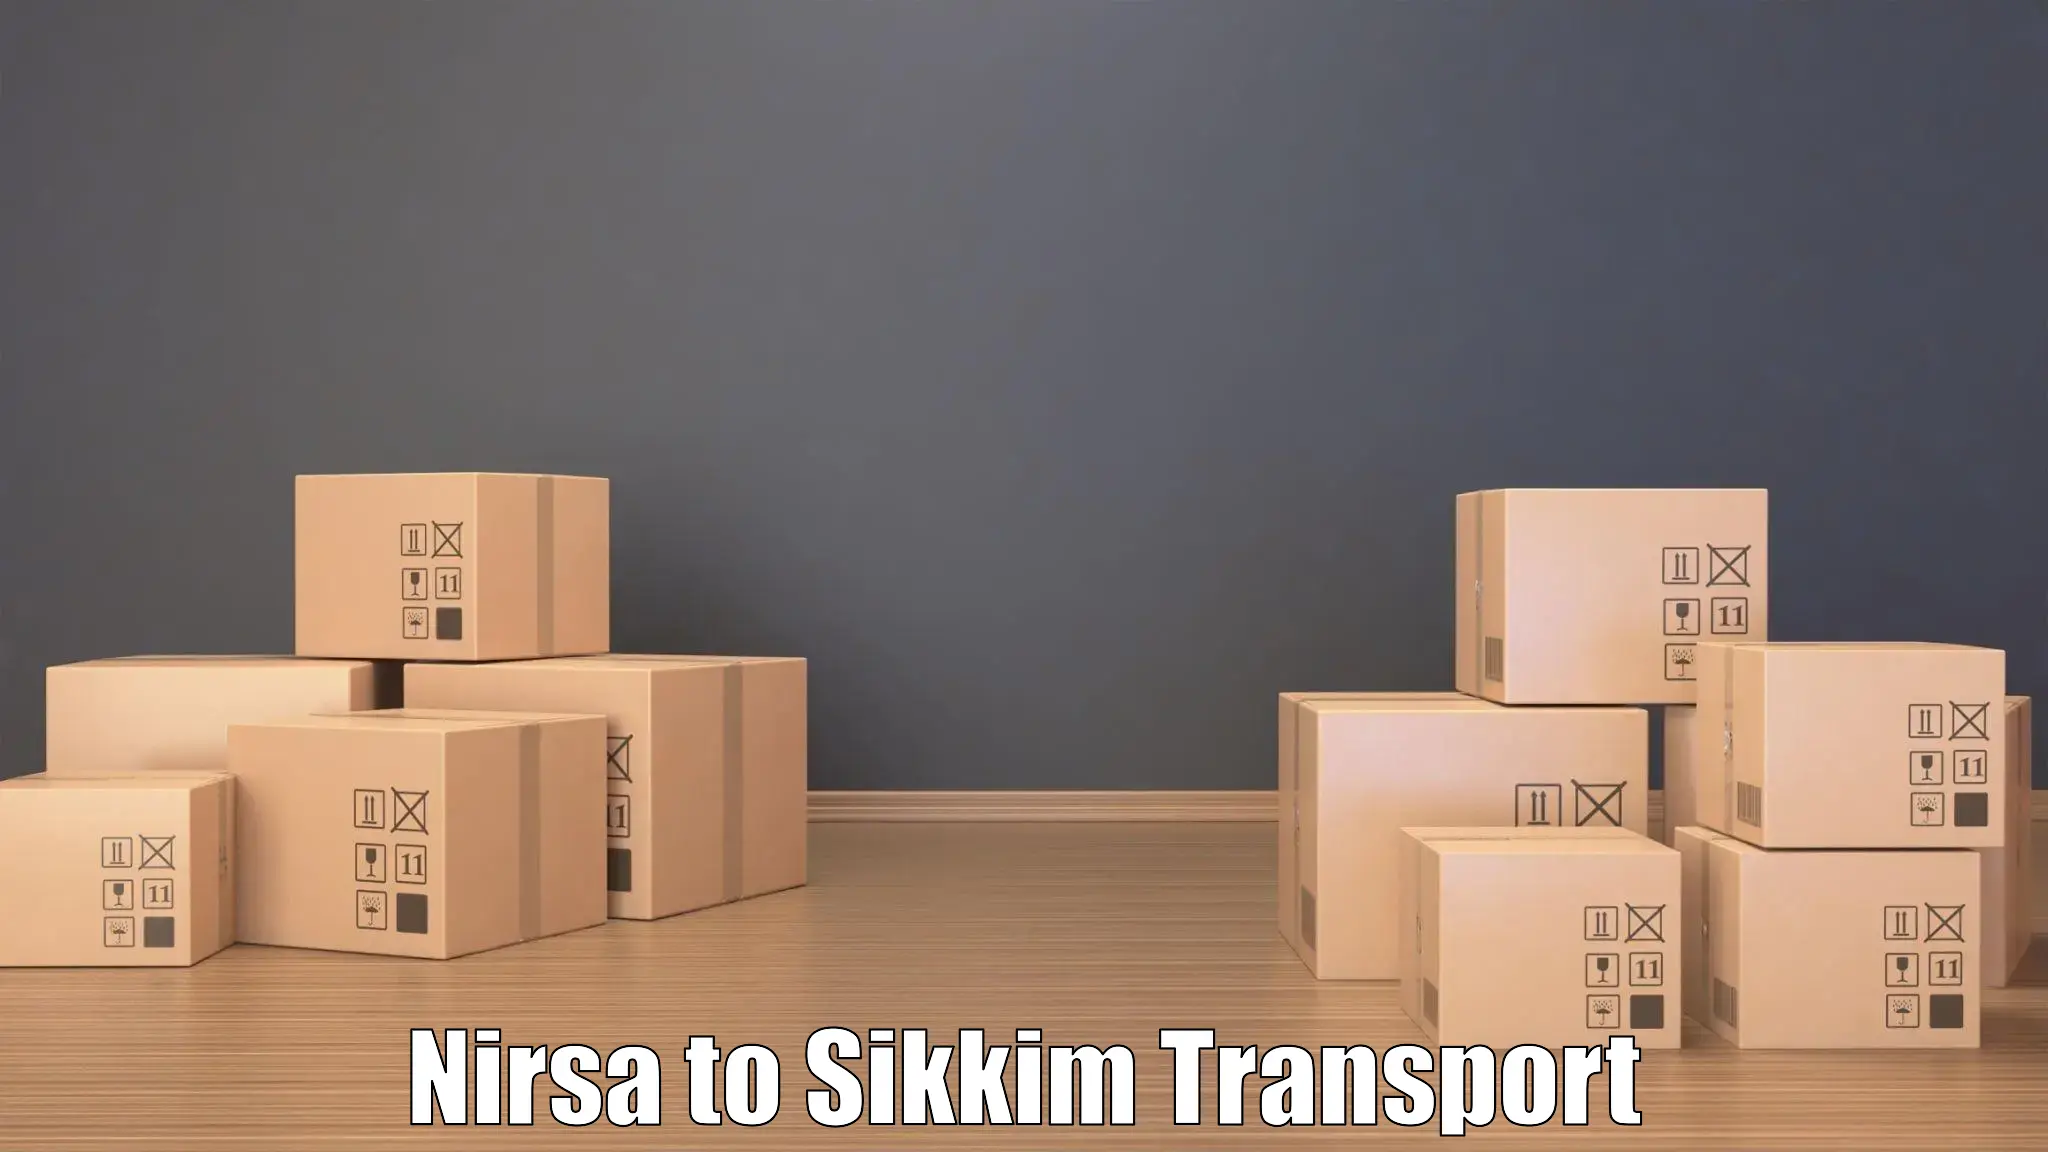 Bike transfer Nirsa to Sikkim